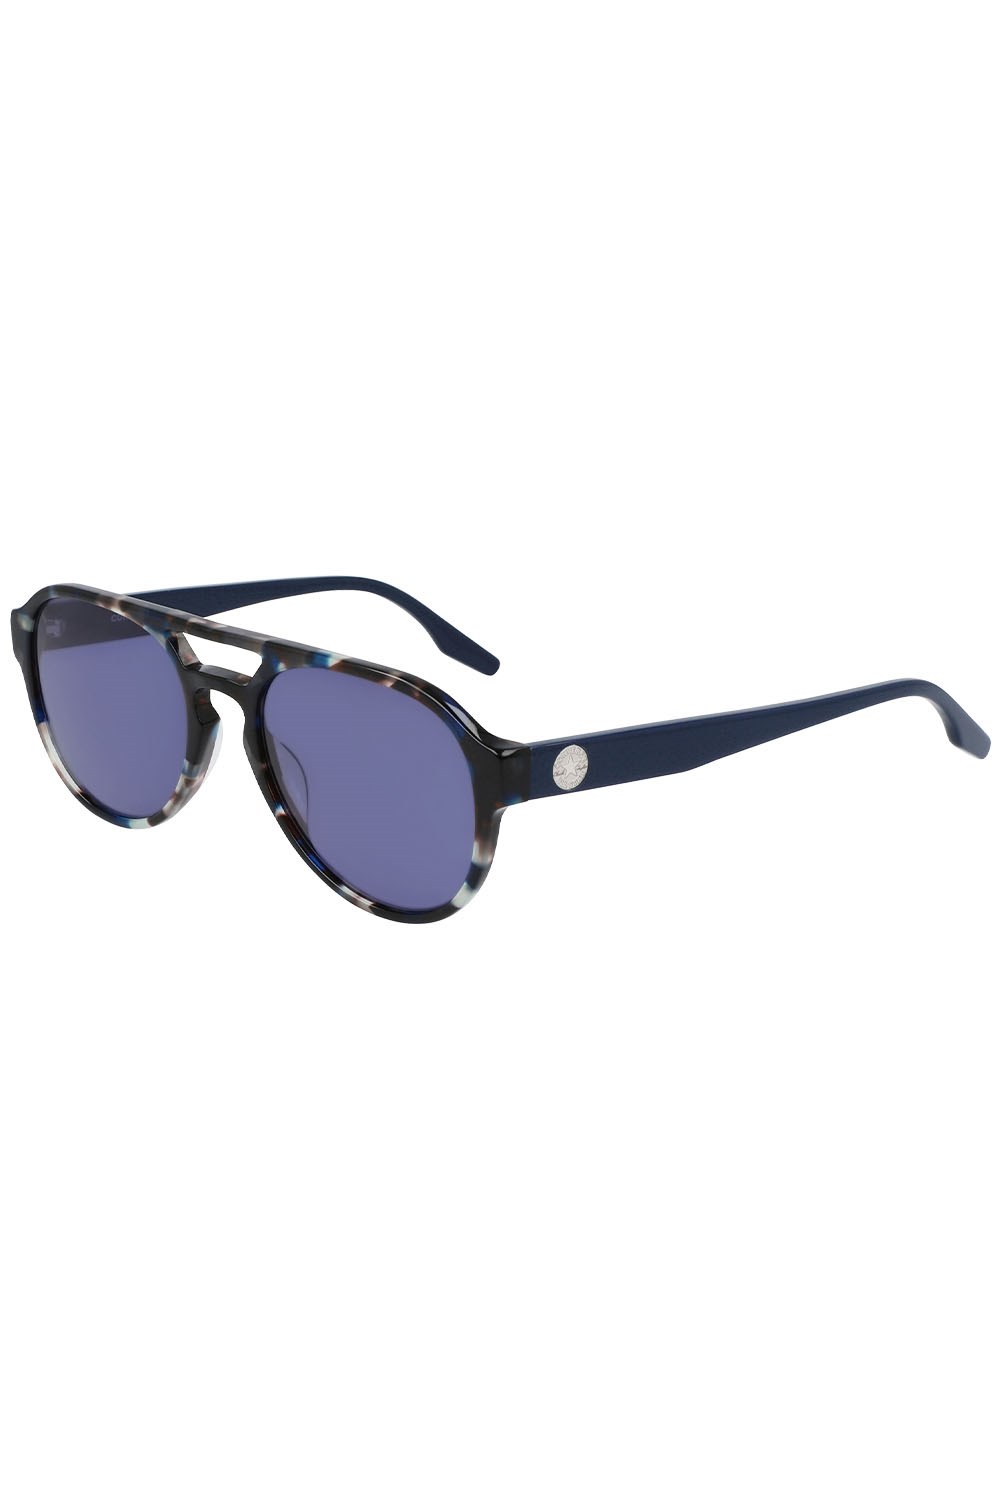 All Star Unisex Sunglasses -